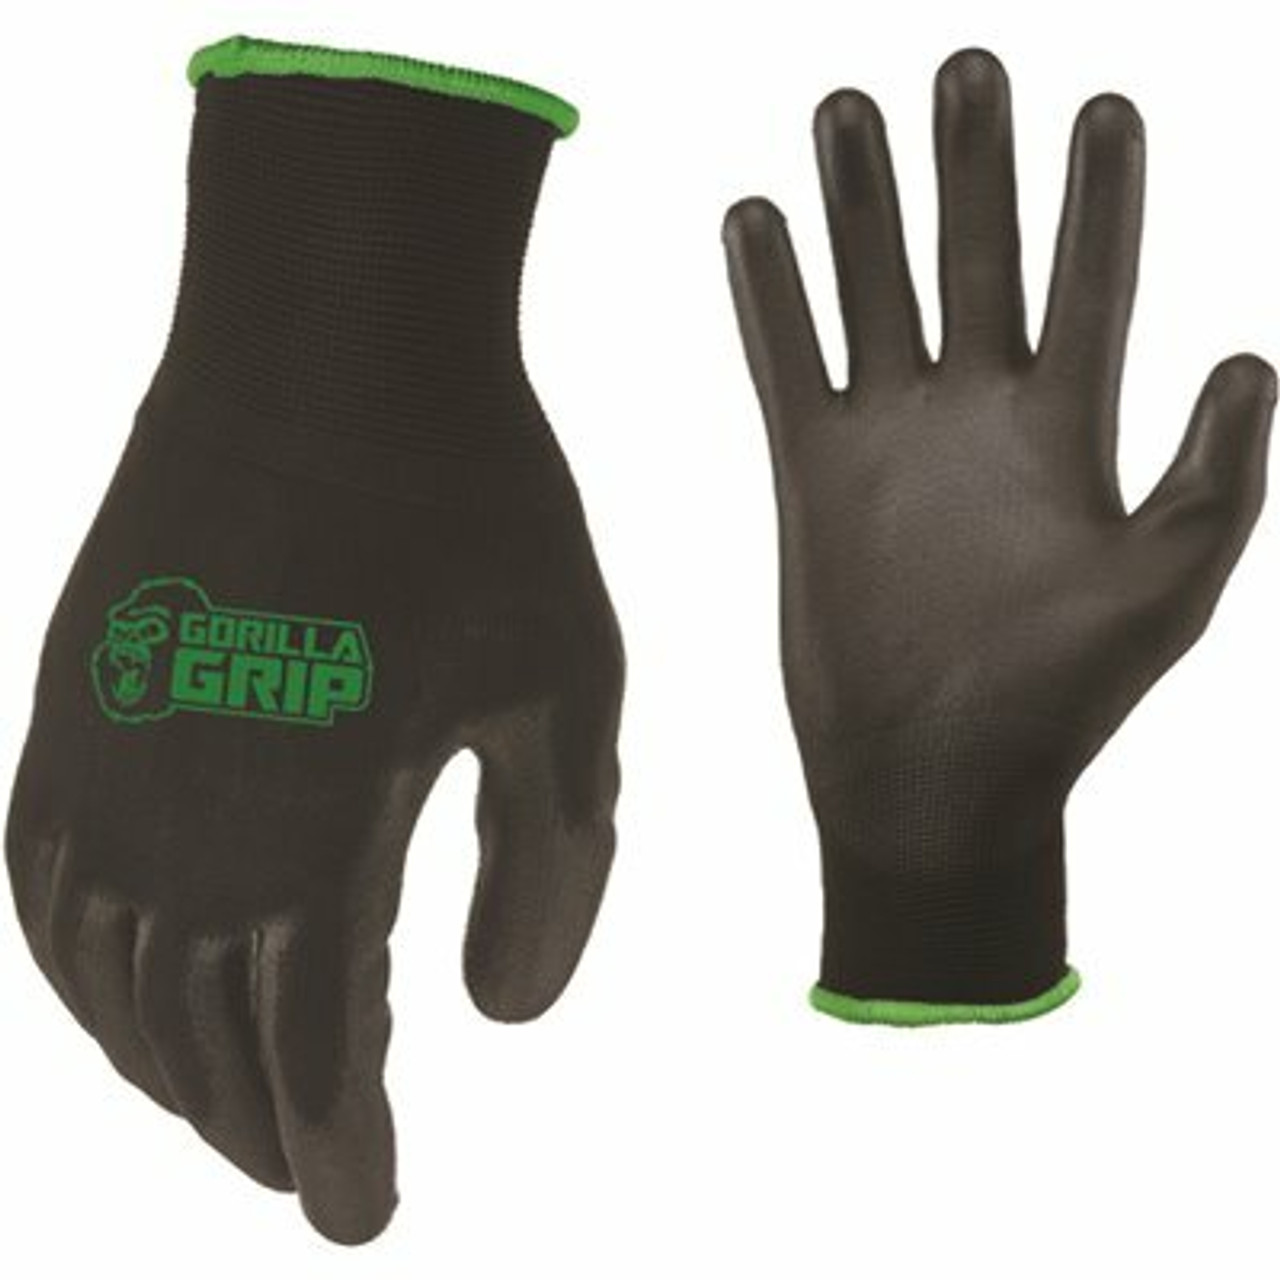 GORILLA GRIP Small Glove - Pack of 30